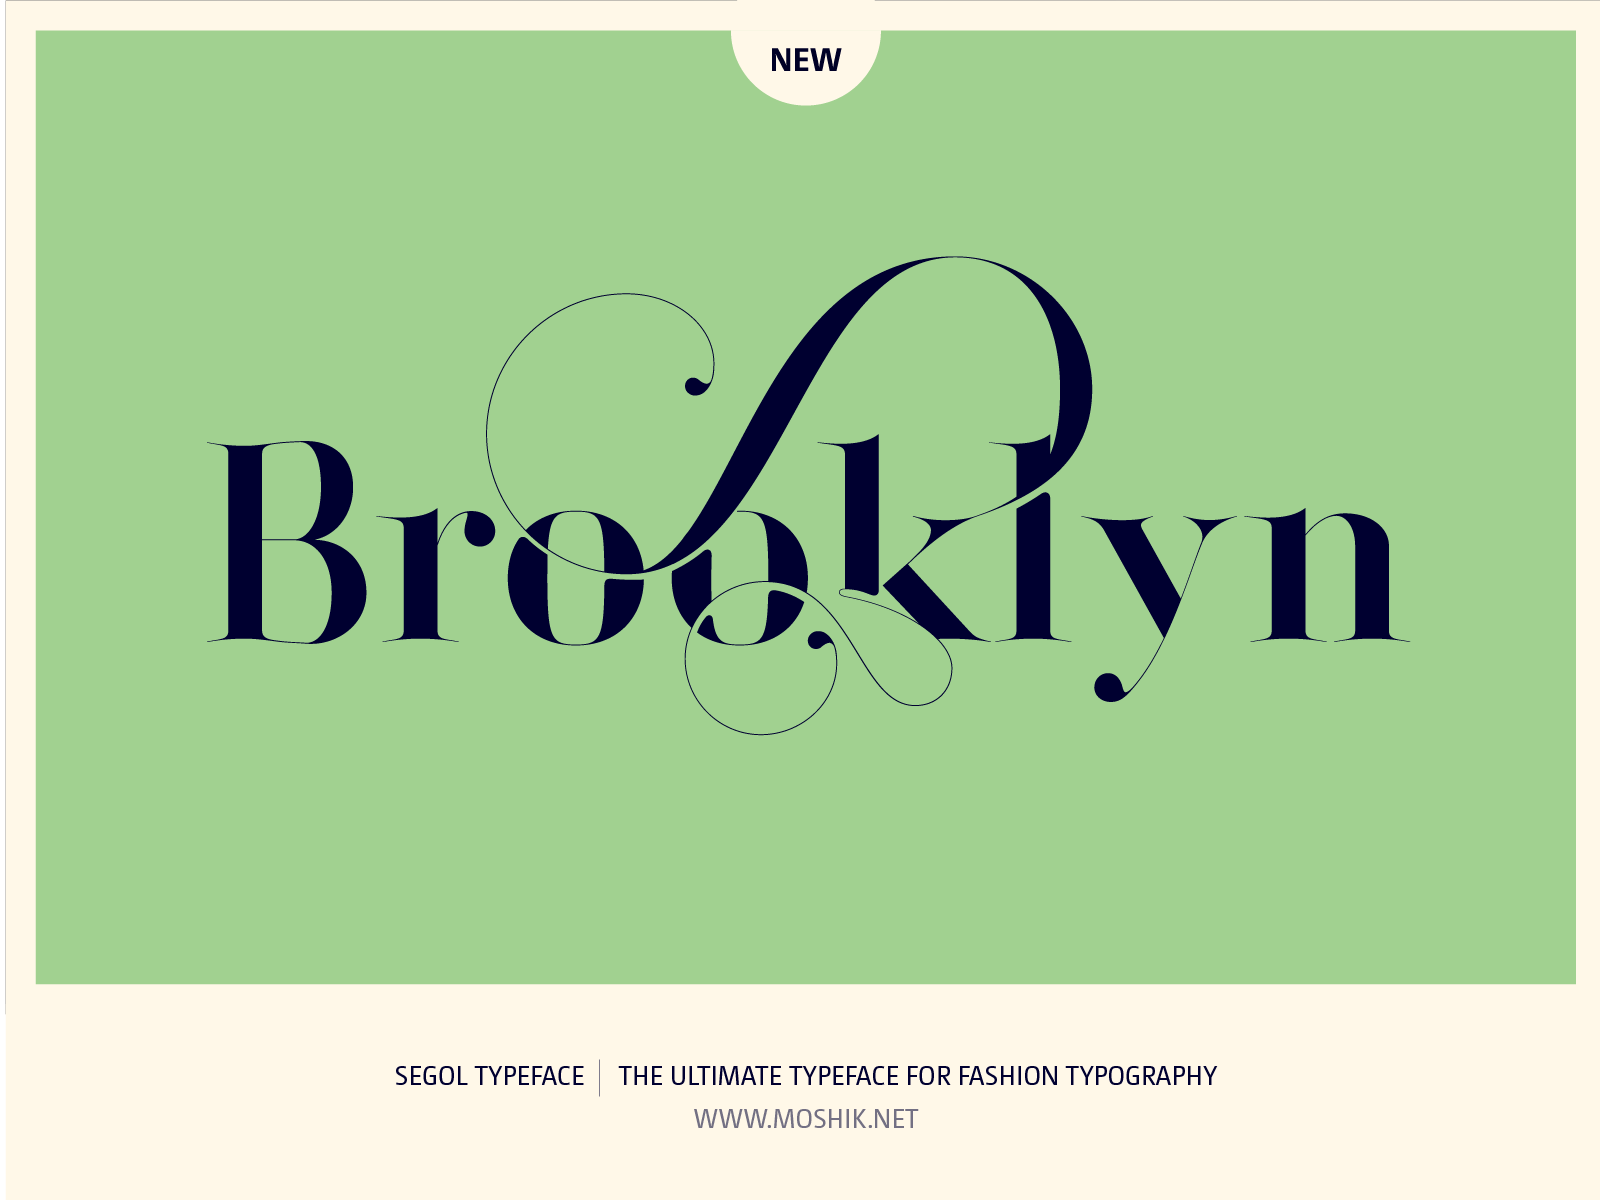 Brooklyn logo, Segol Typeface, fashion fonts, best fonts 2021, best fonts for logos, sexy fonts, sexy logos, Vogue fonts, Moshik Nadav, Fashion magazine fonts, Must have fonts